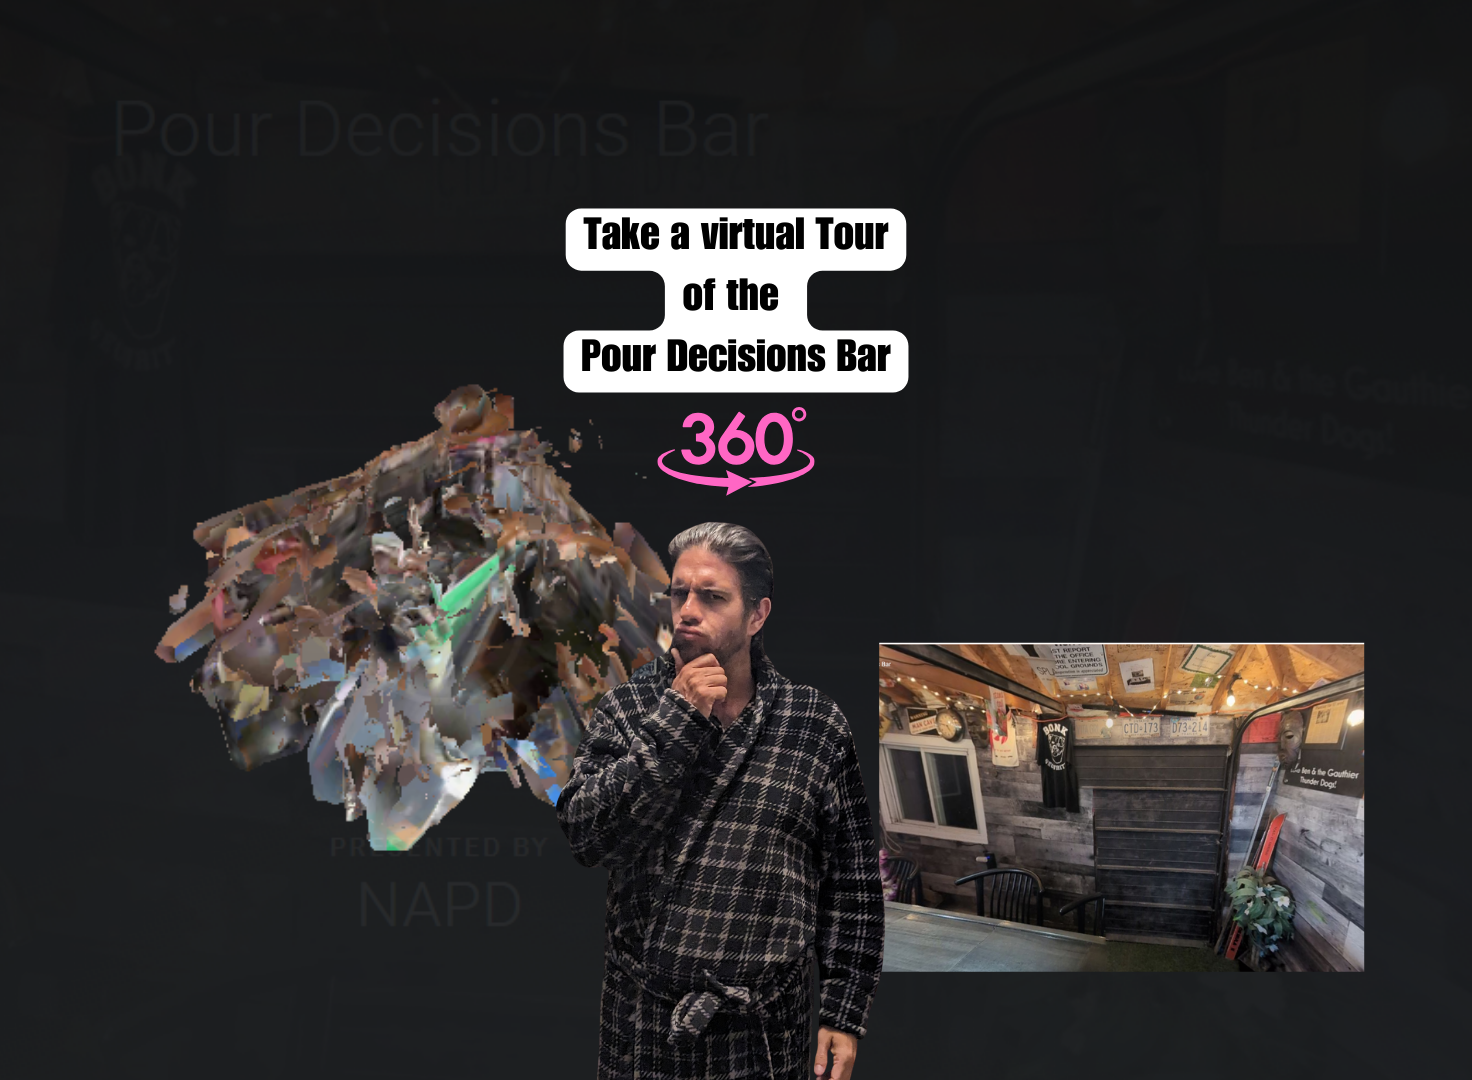 My bar's Virtual Tour